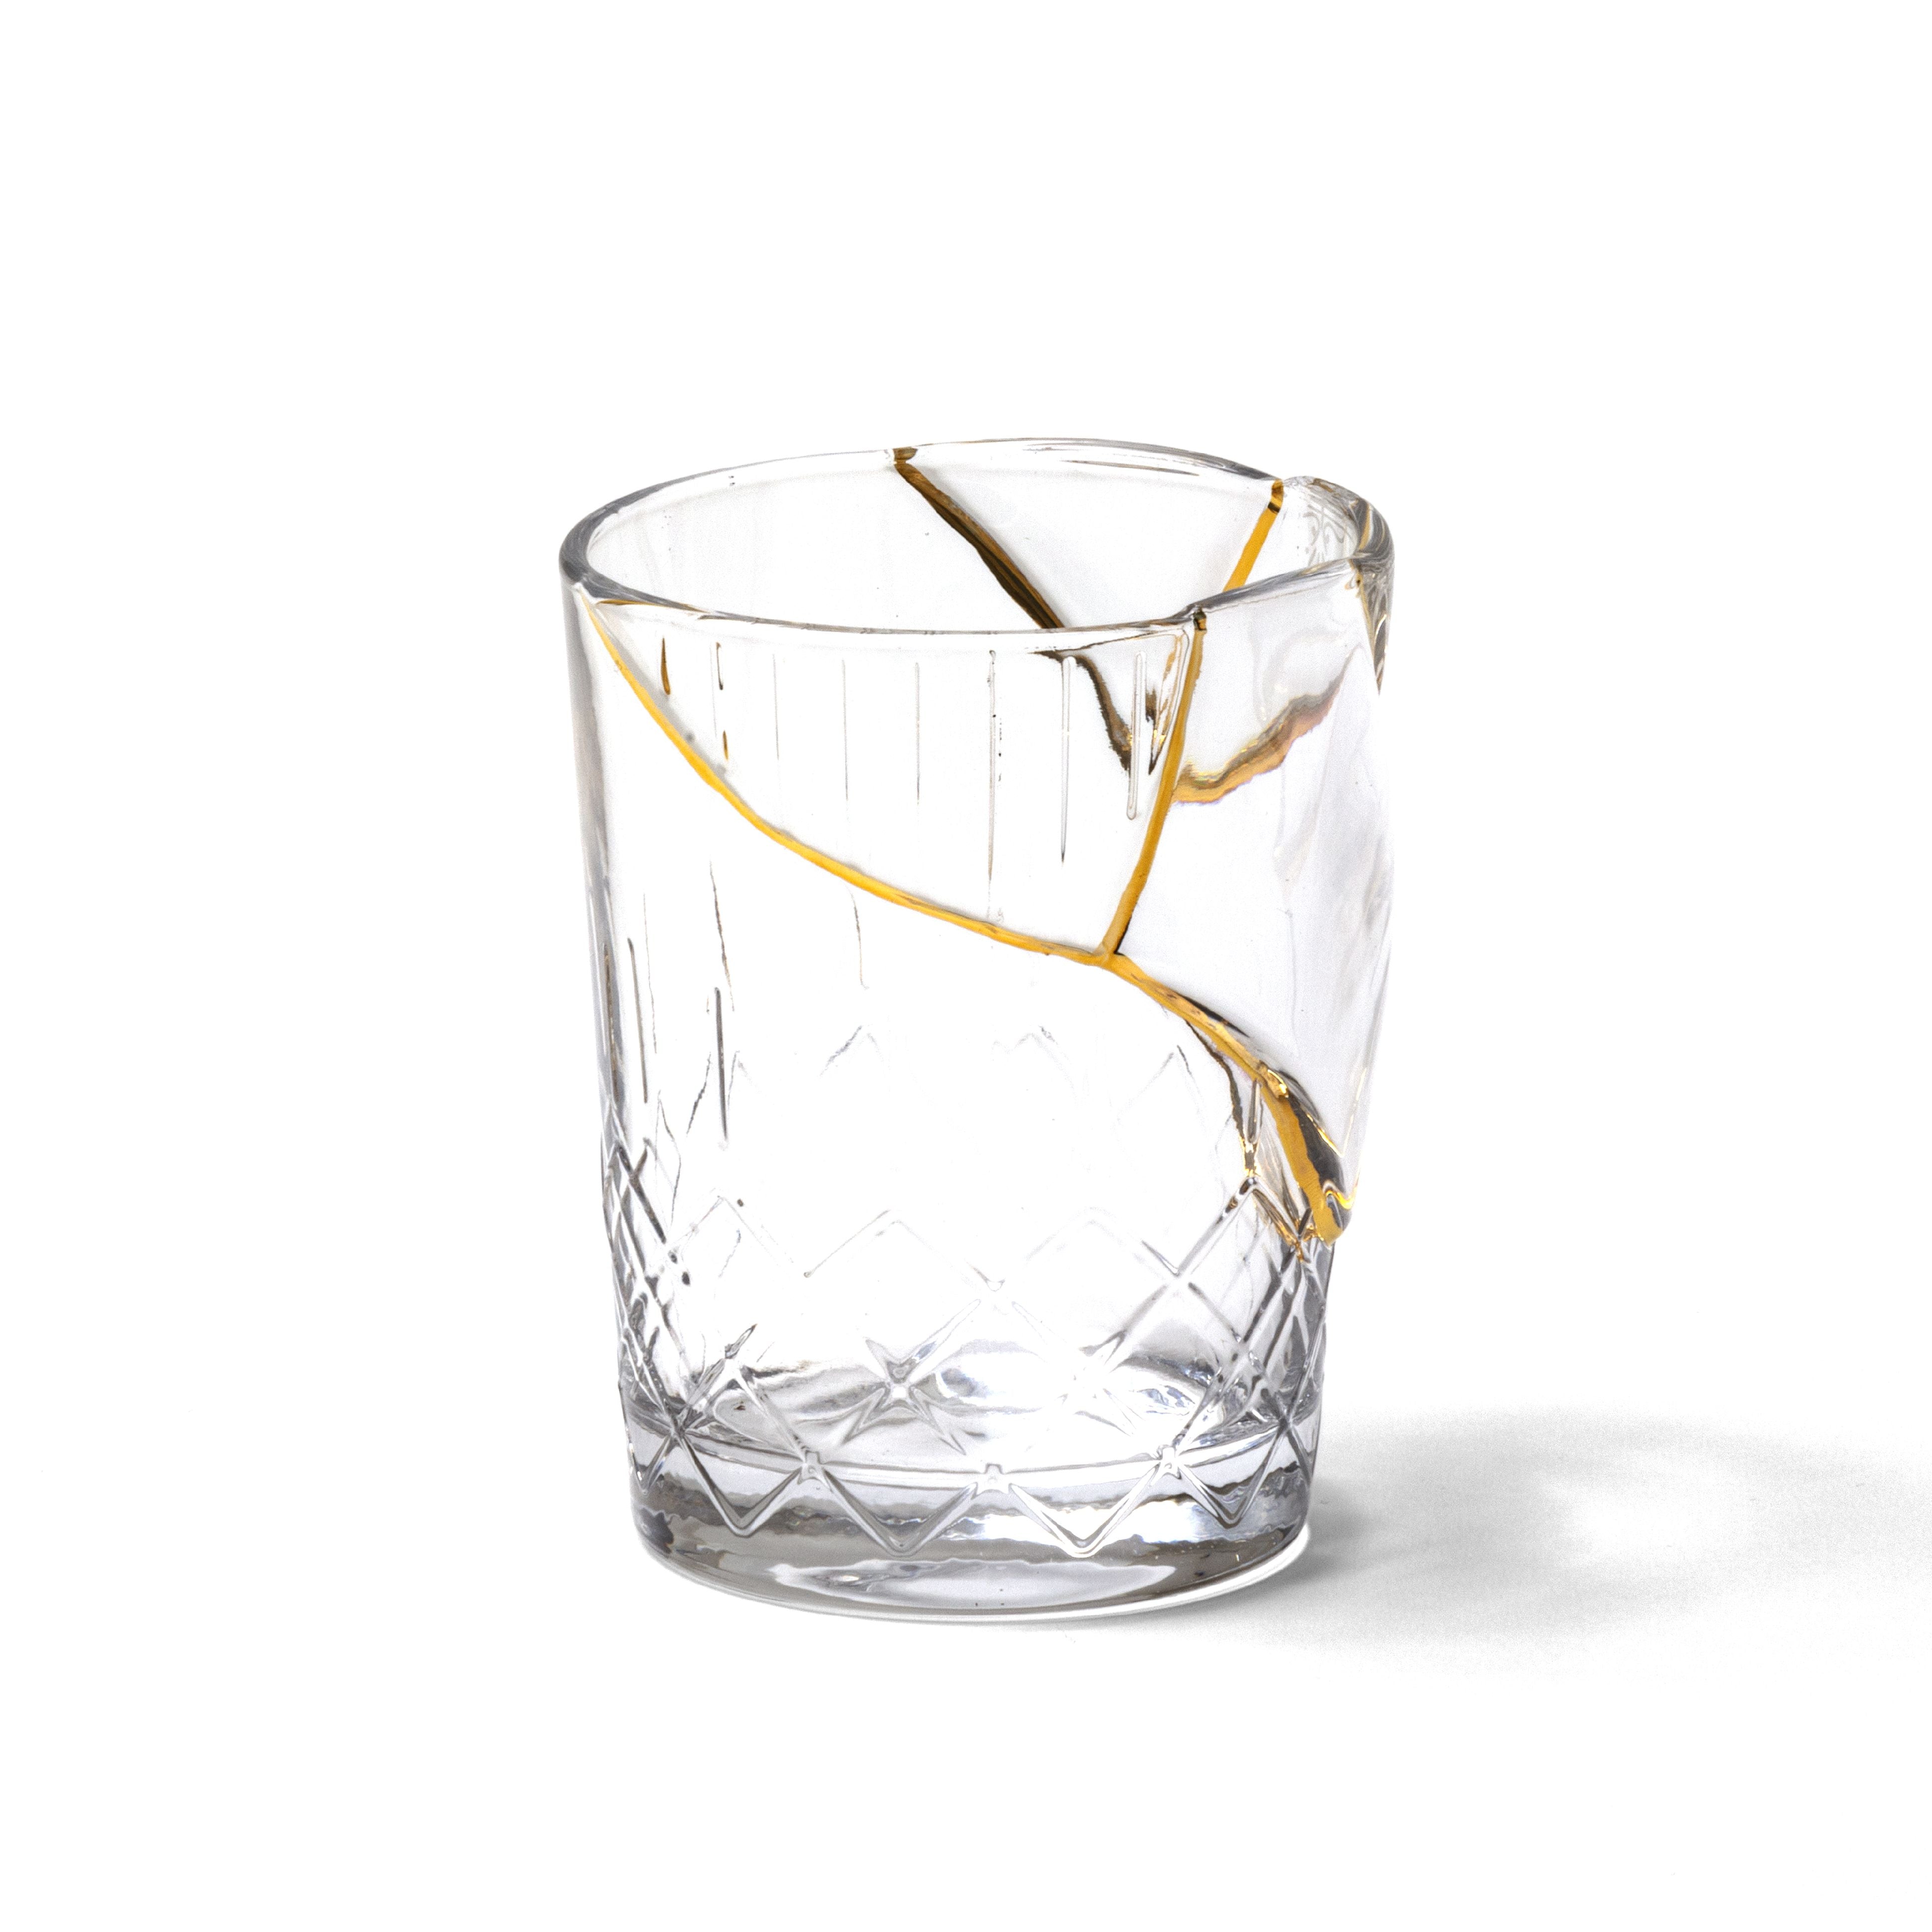 Seletti Kintsugi Glass, n. 1